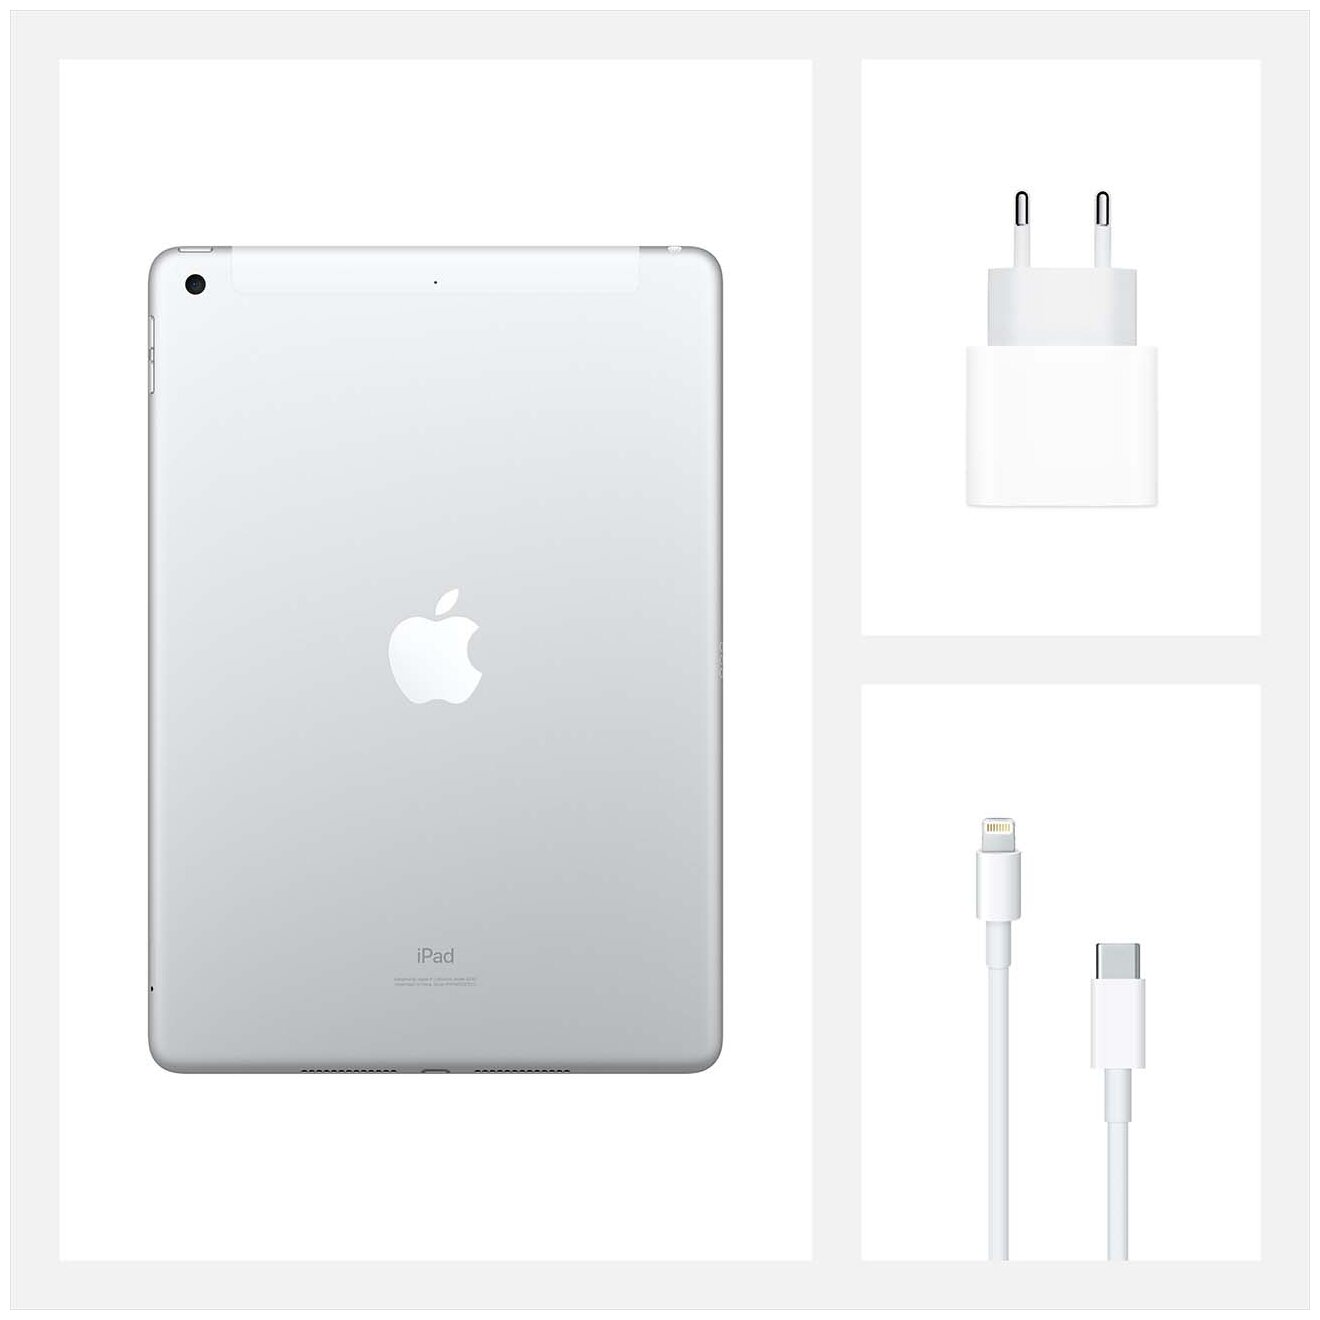 Планшетный компьютер Apple iPad MYMK2RU/A Wi-Fi 3G 32 Гб золотистый